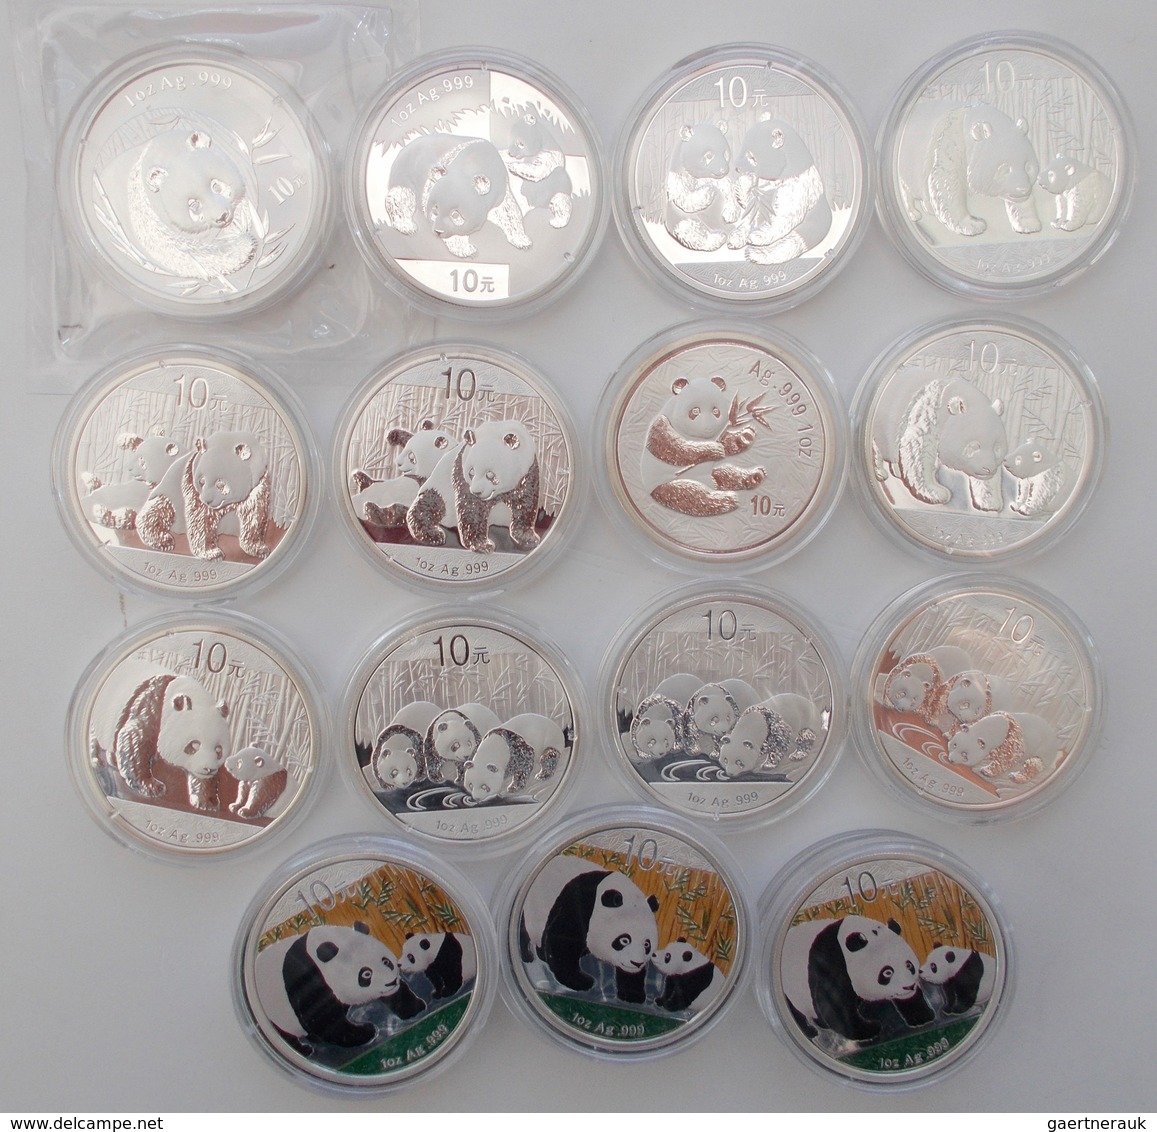 China - Volksrepublik: Lot 18 X 1 OZ Silber Panda Diverse Jahrgänge, Dabei: 1 X 2000, 1 X 2003 Einge - China